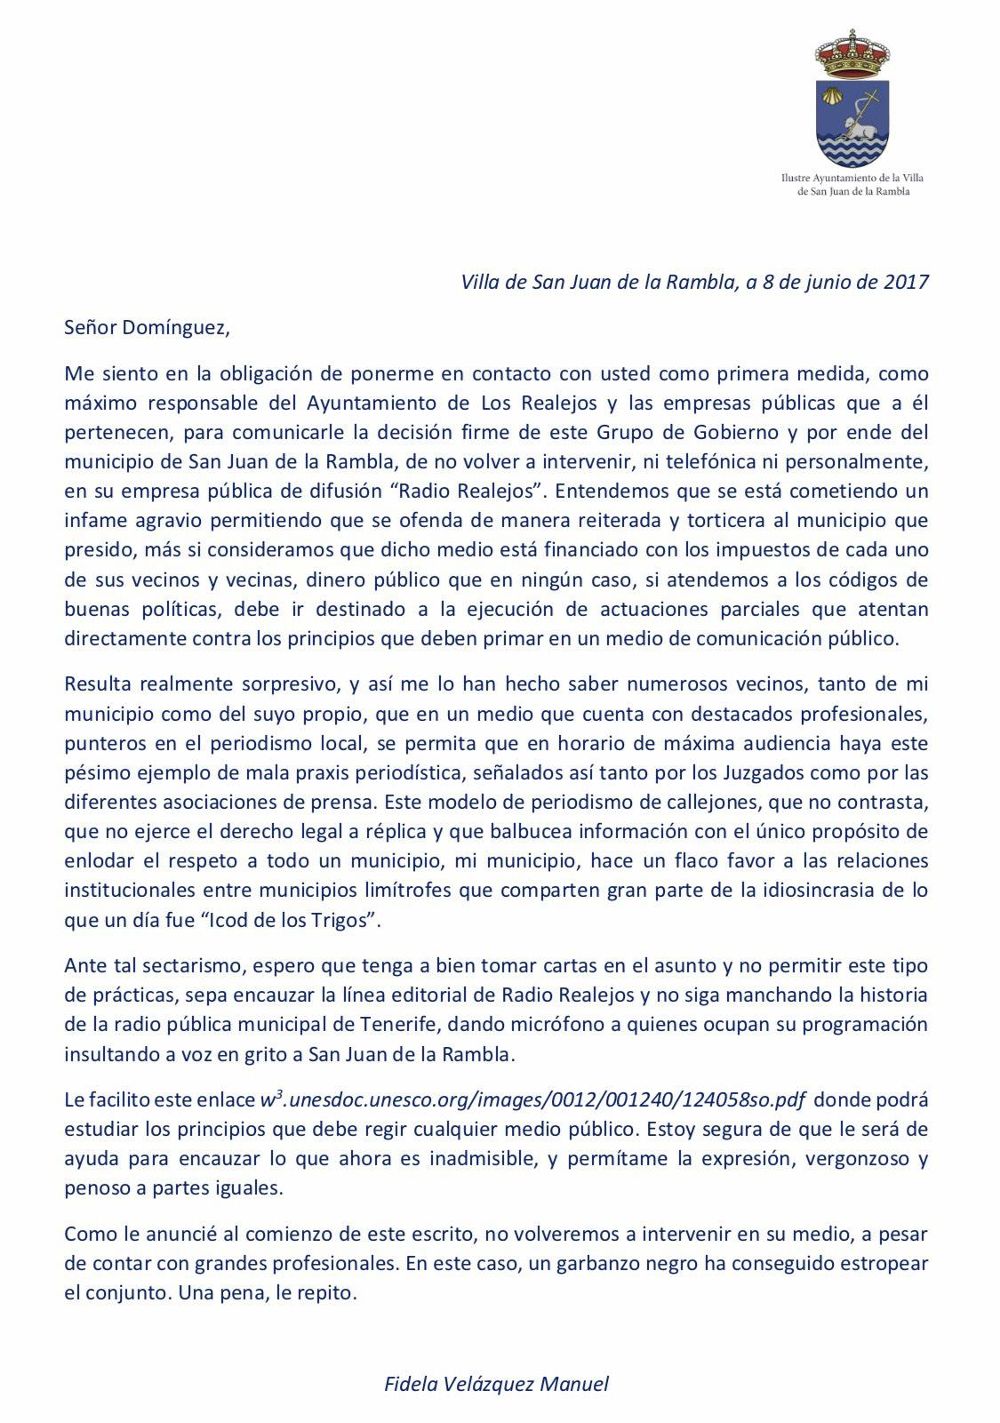 La carta dirigida por Fidela Velázquez (PSOE) a Manuel Domínguez (PP).